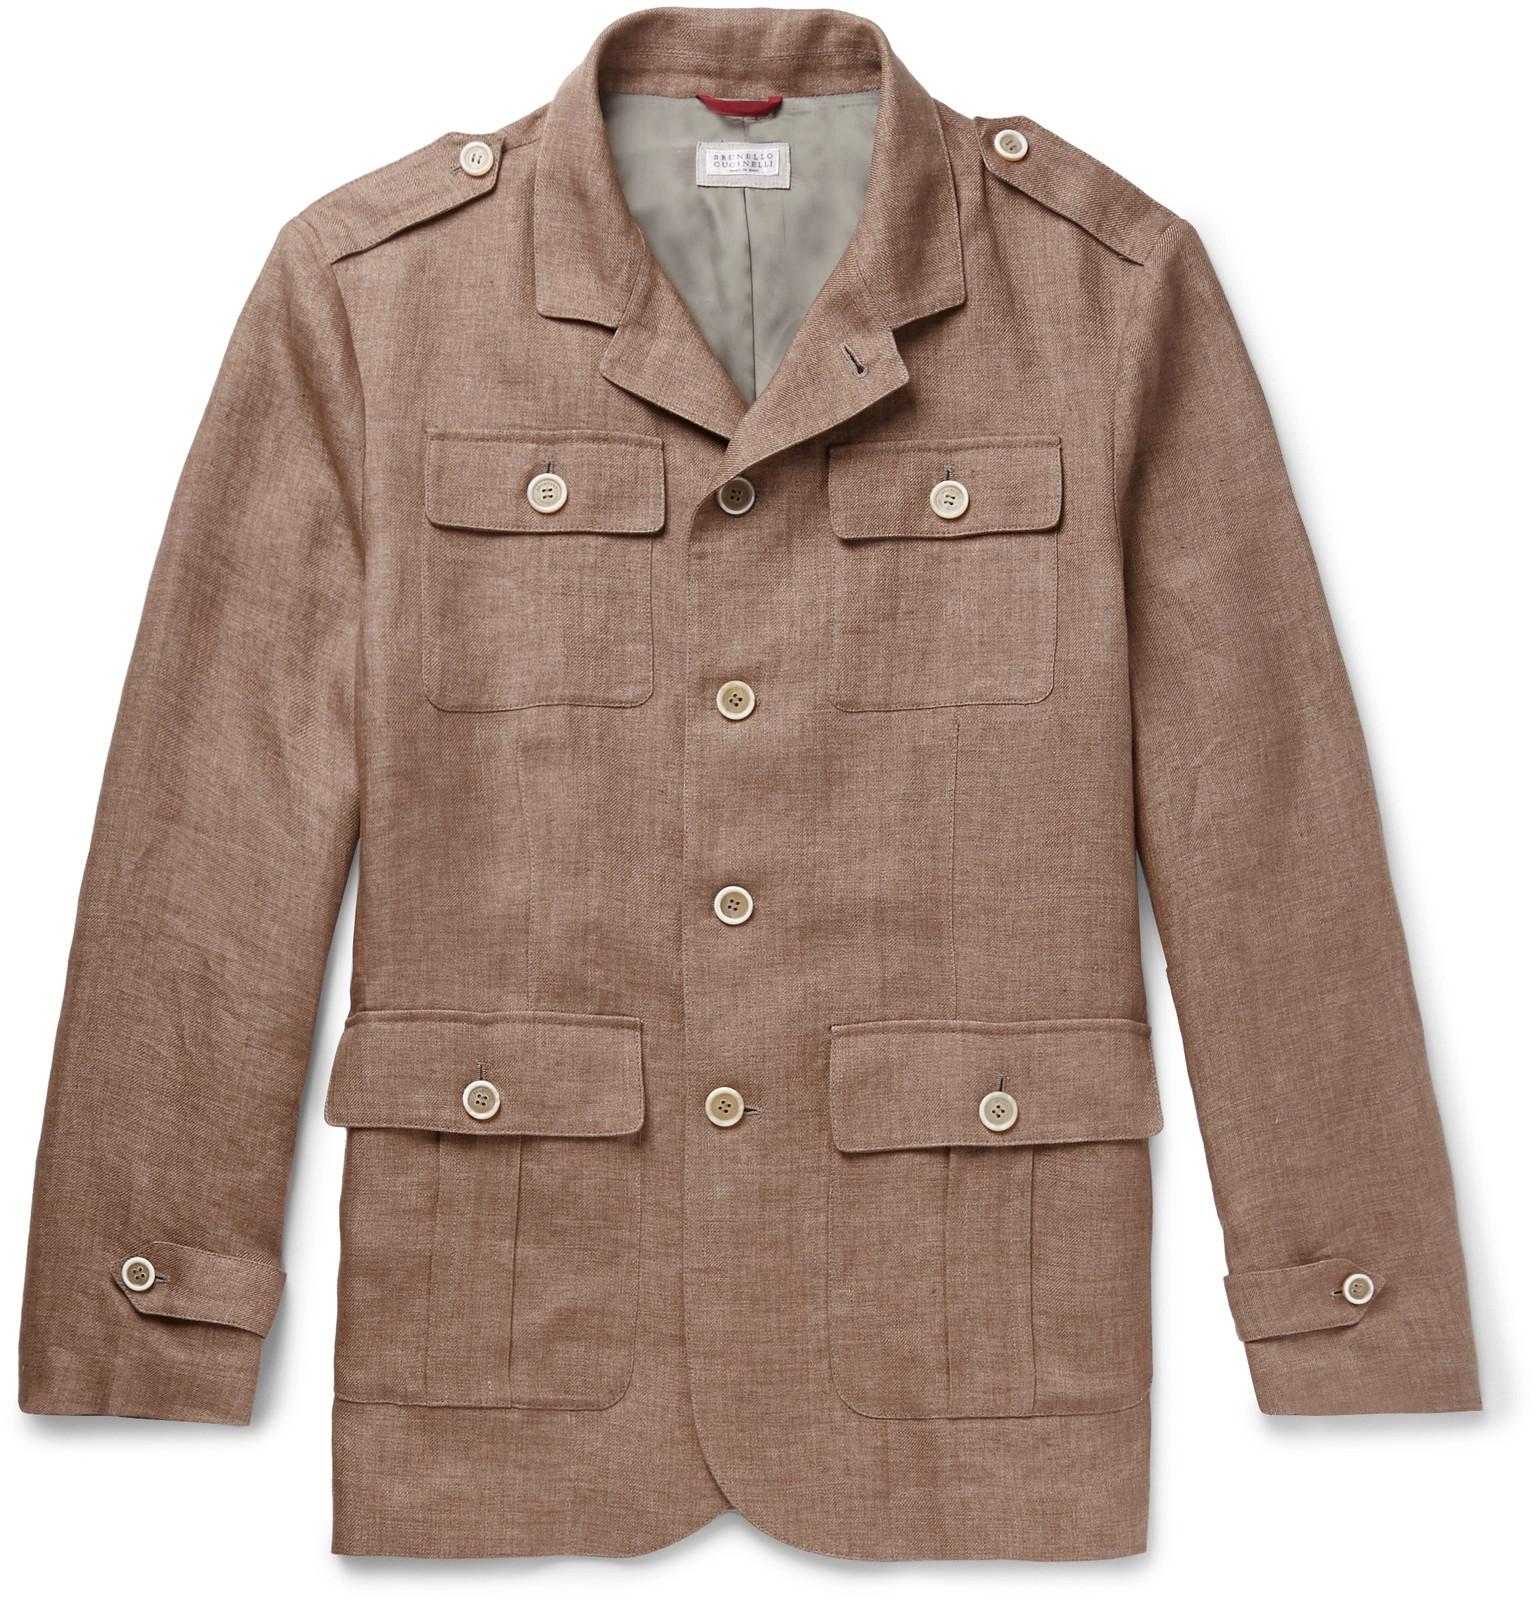 Brunello Cucinelli Linen Field Jacket in Brown for Men - Lyst